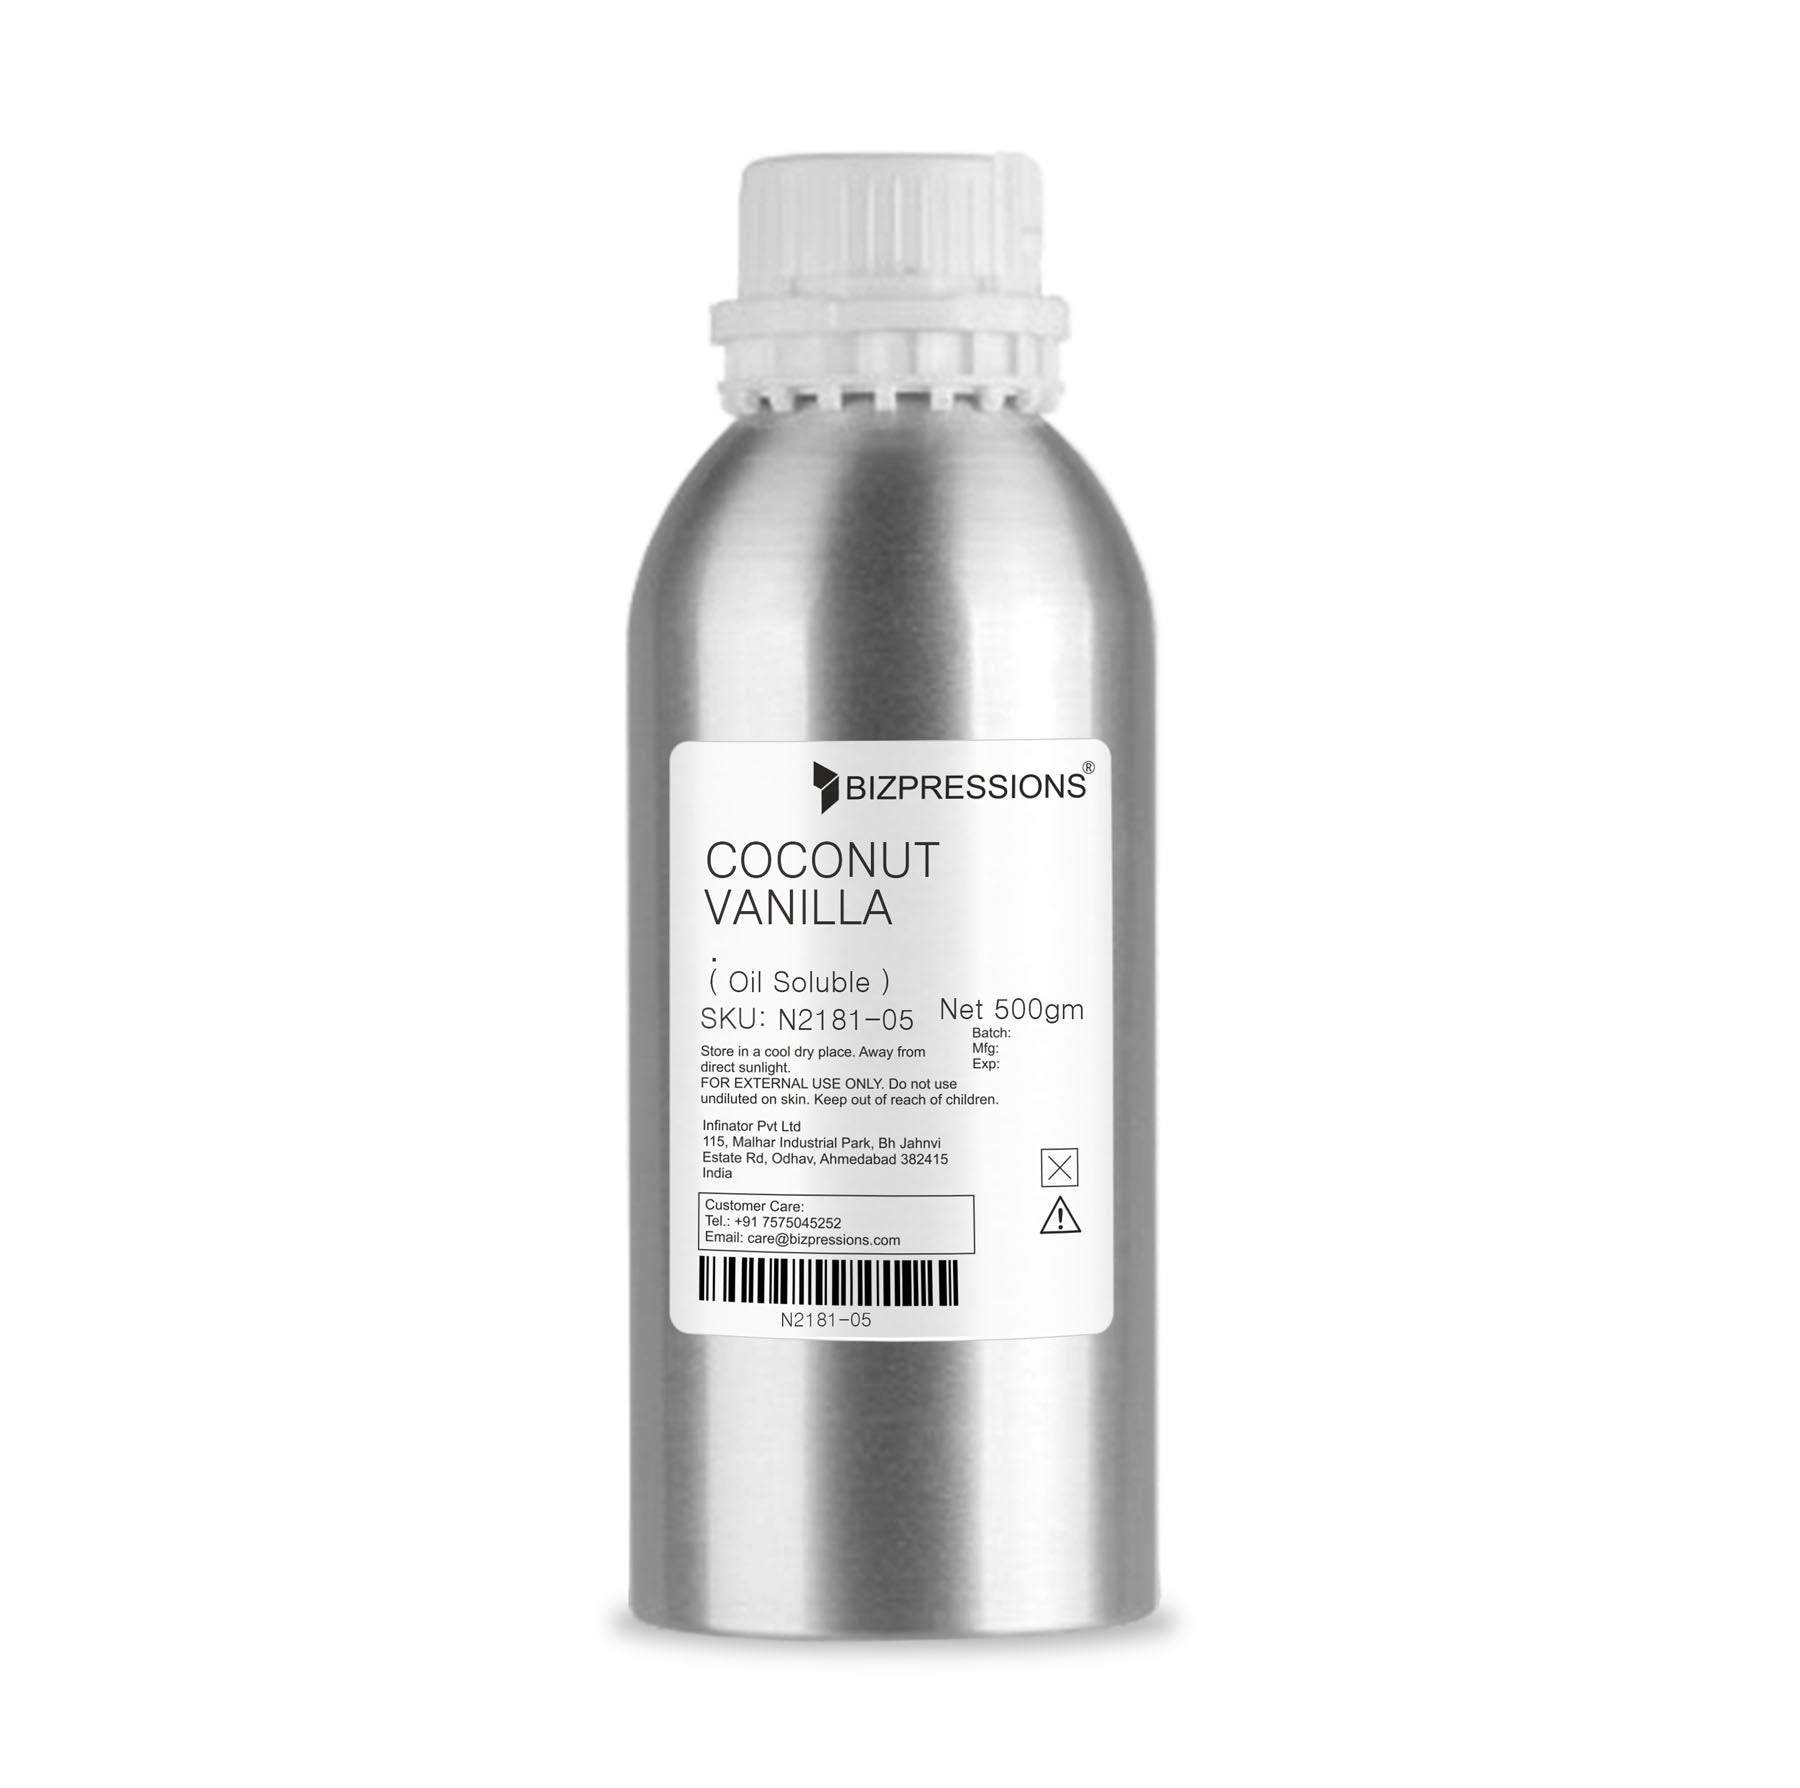 COCONUT VANILLA - Fragrance  Oil Soluble ) - 500 gm